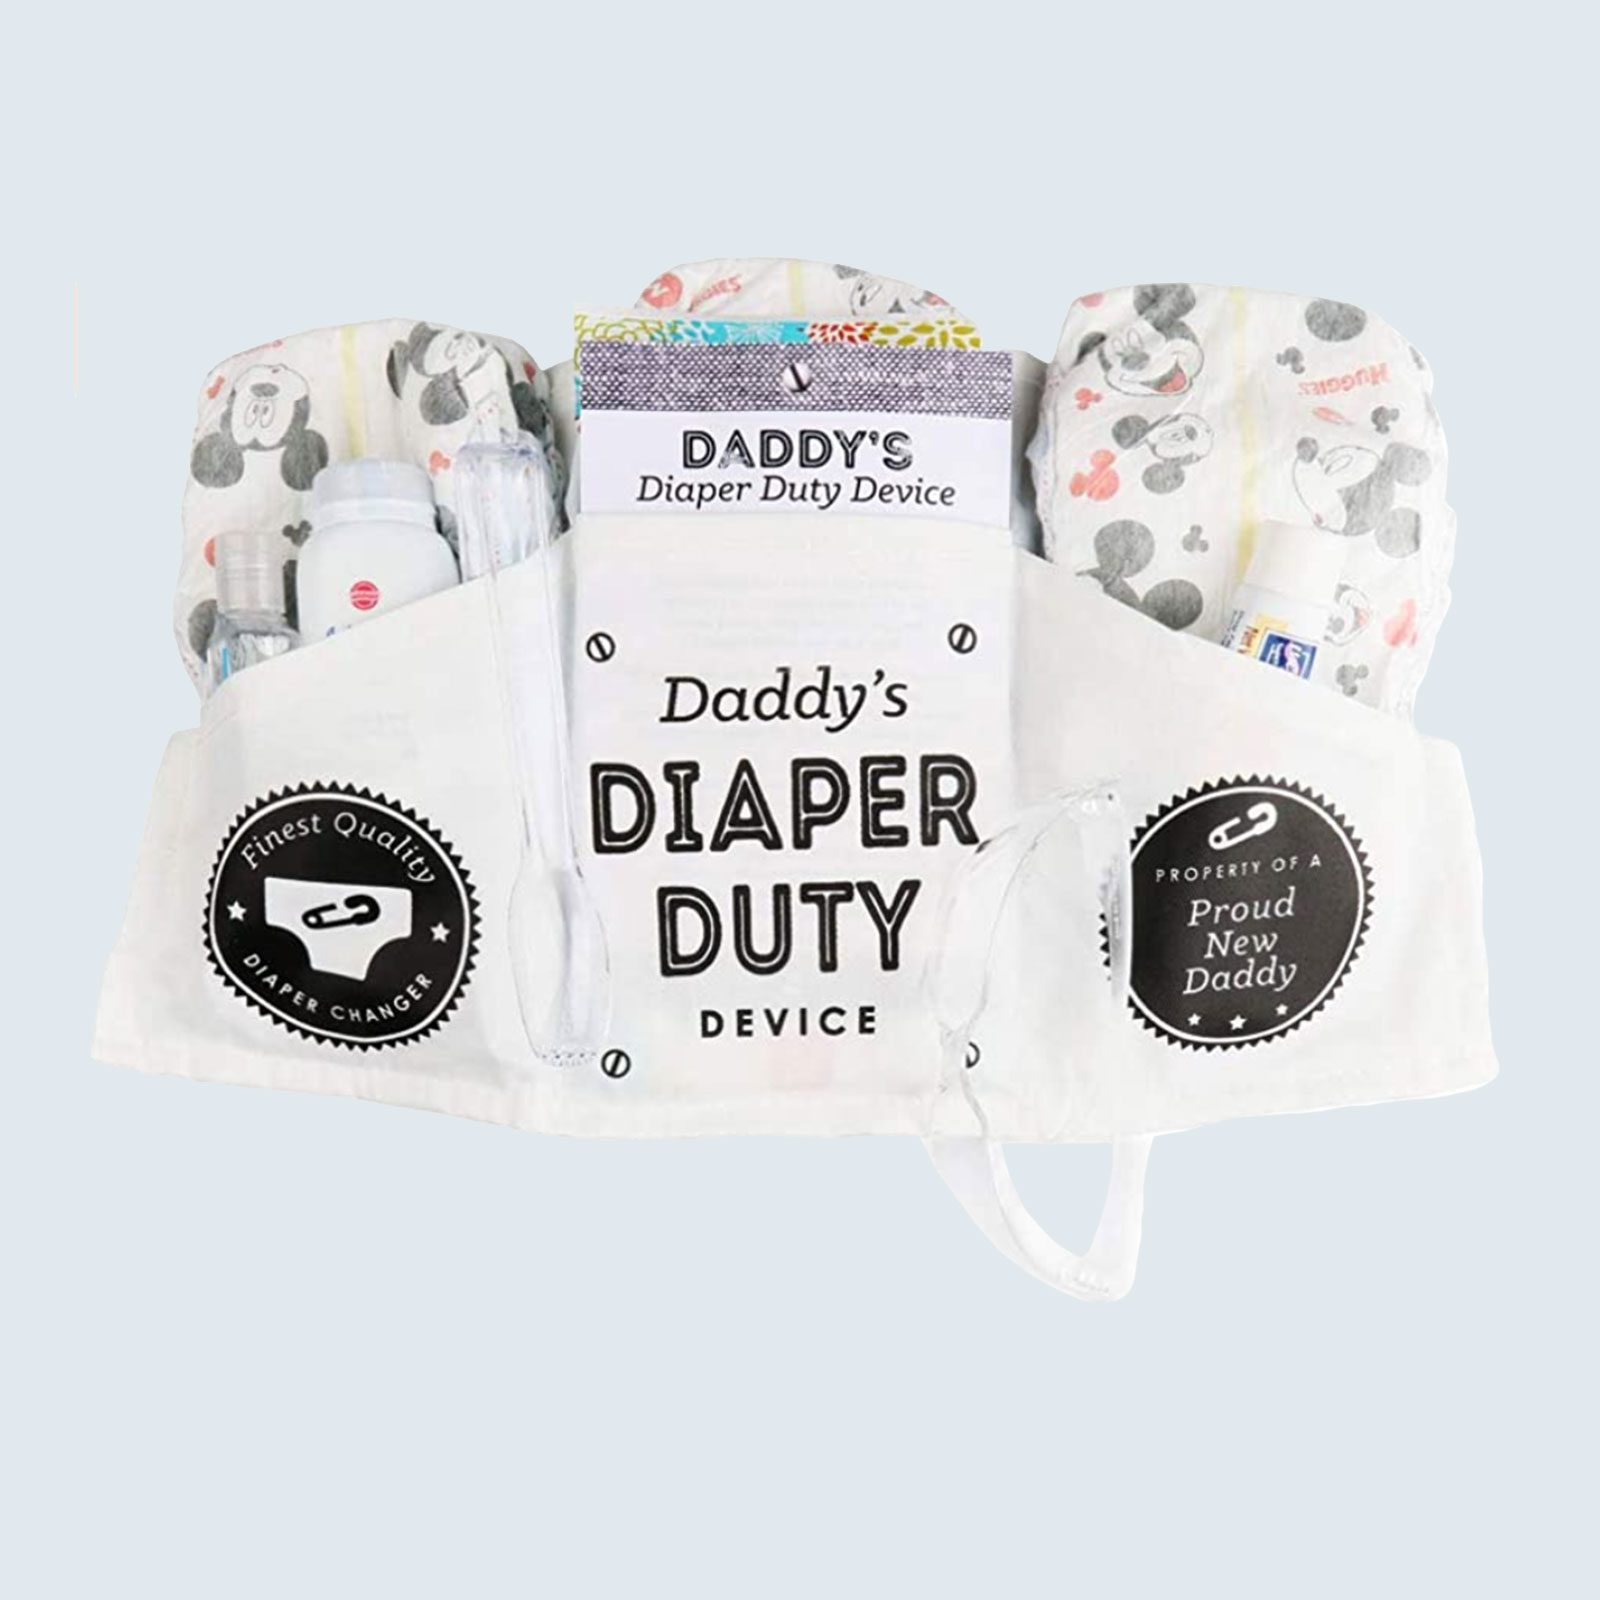 Daddy's Diaper Duty Device